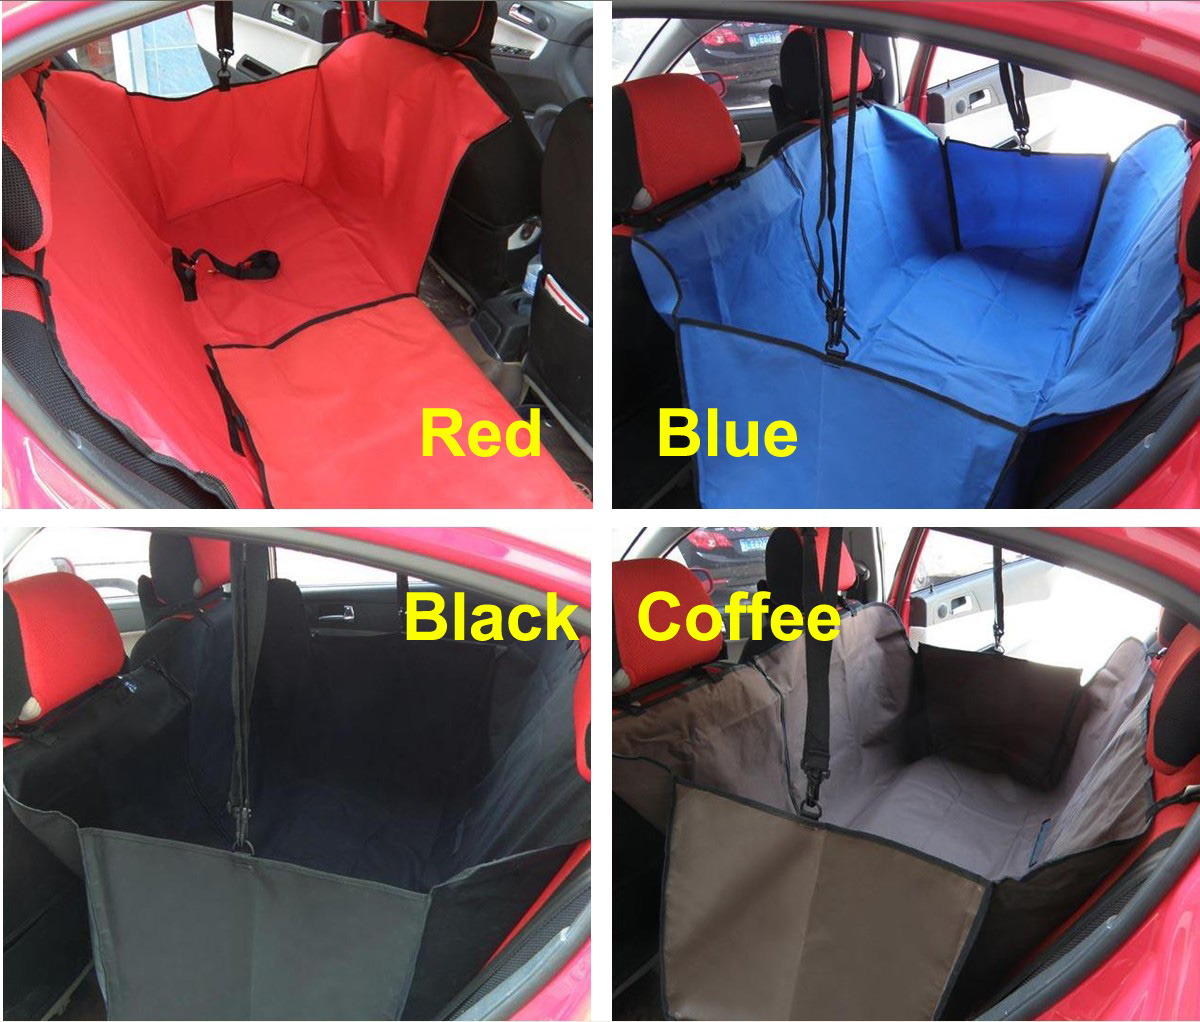 Bergan car seat protector single poncho